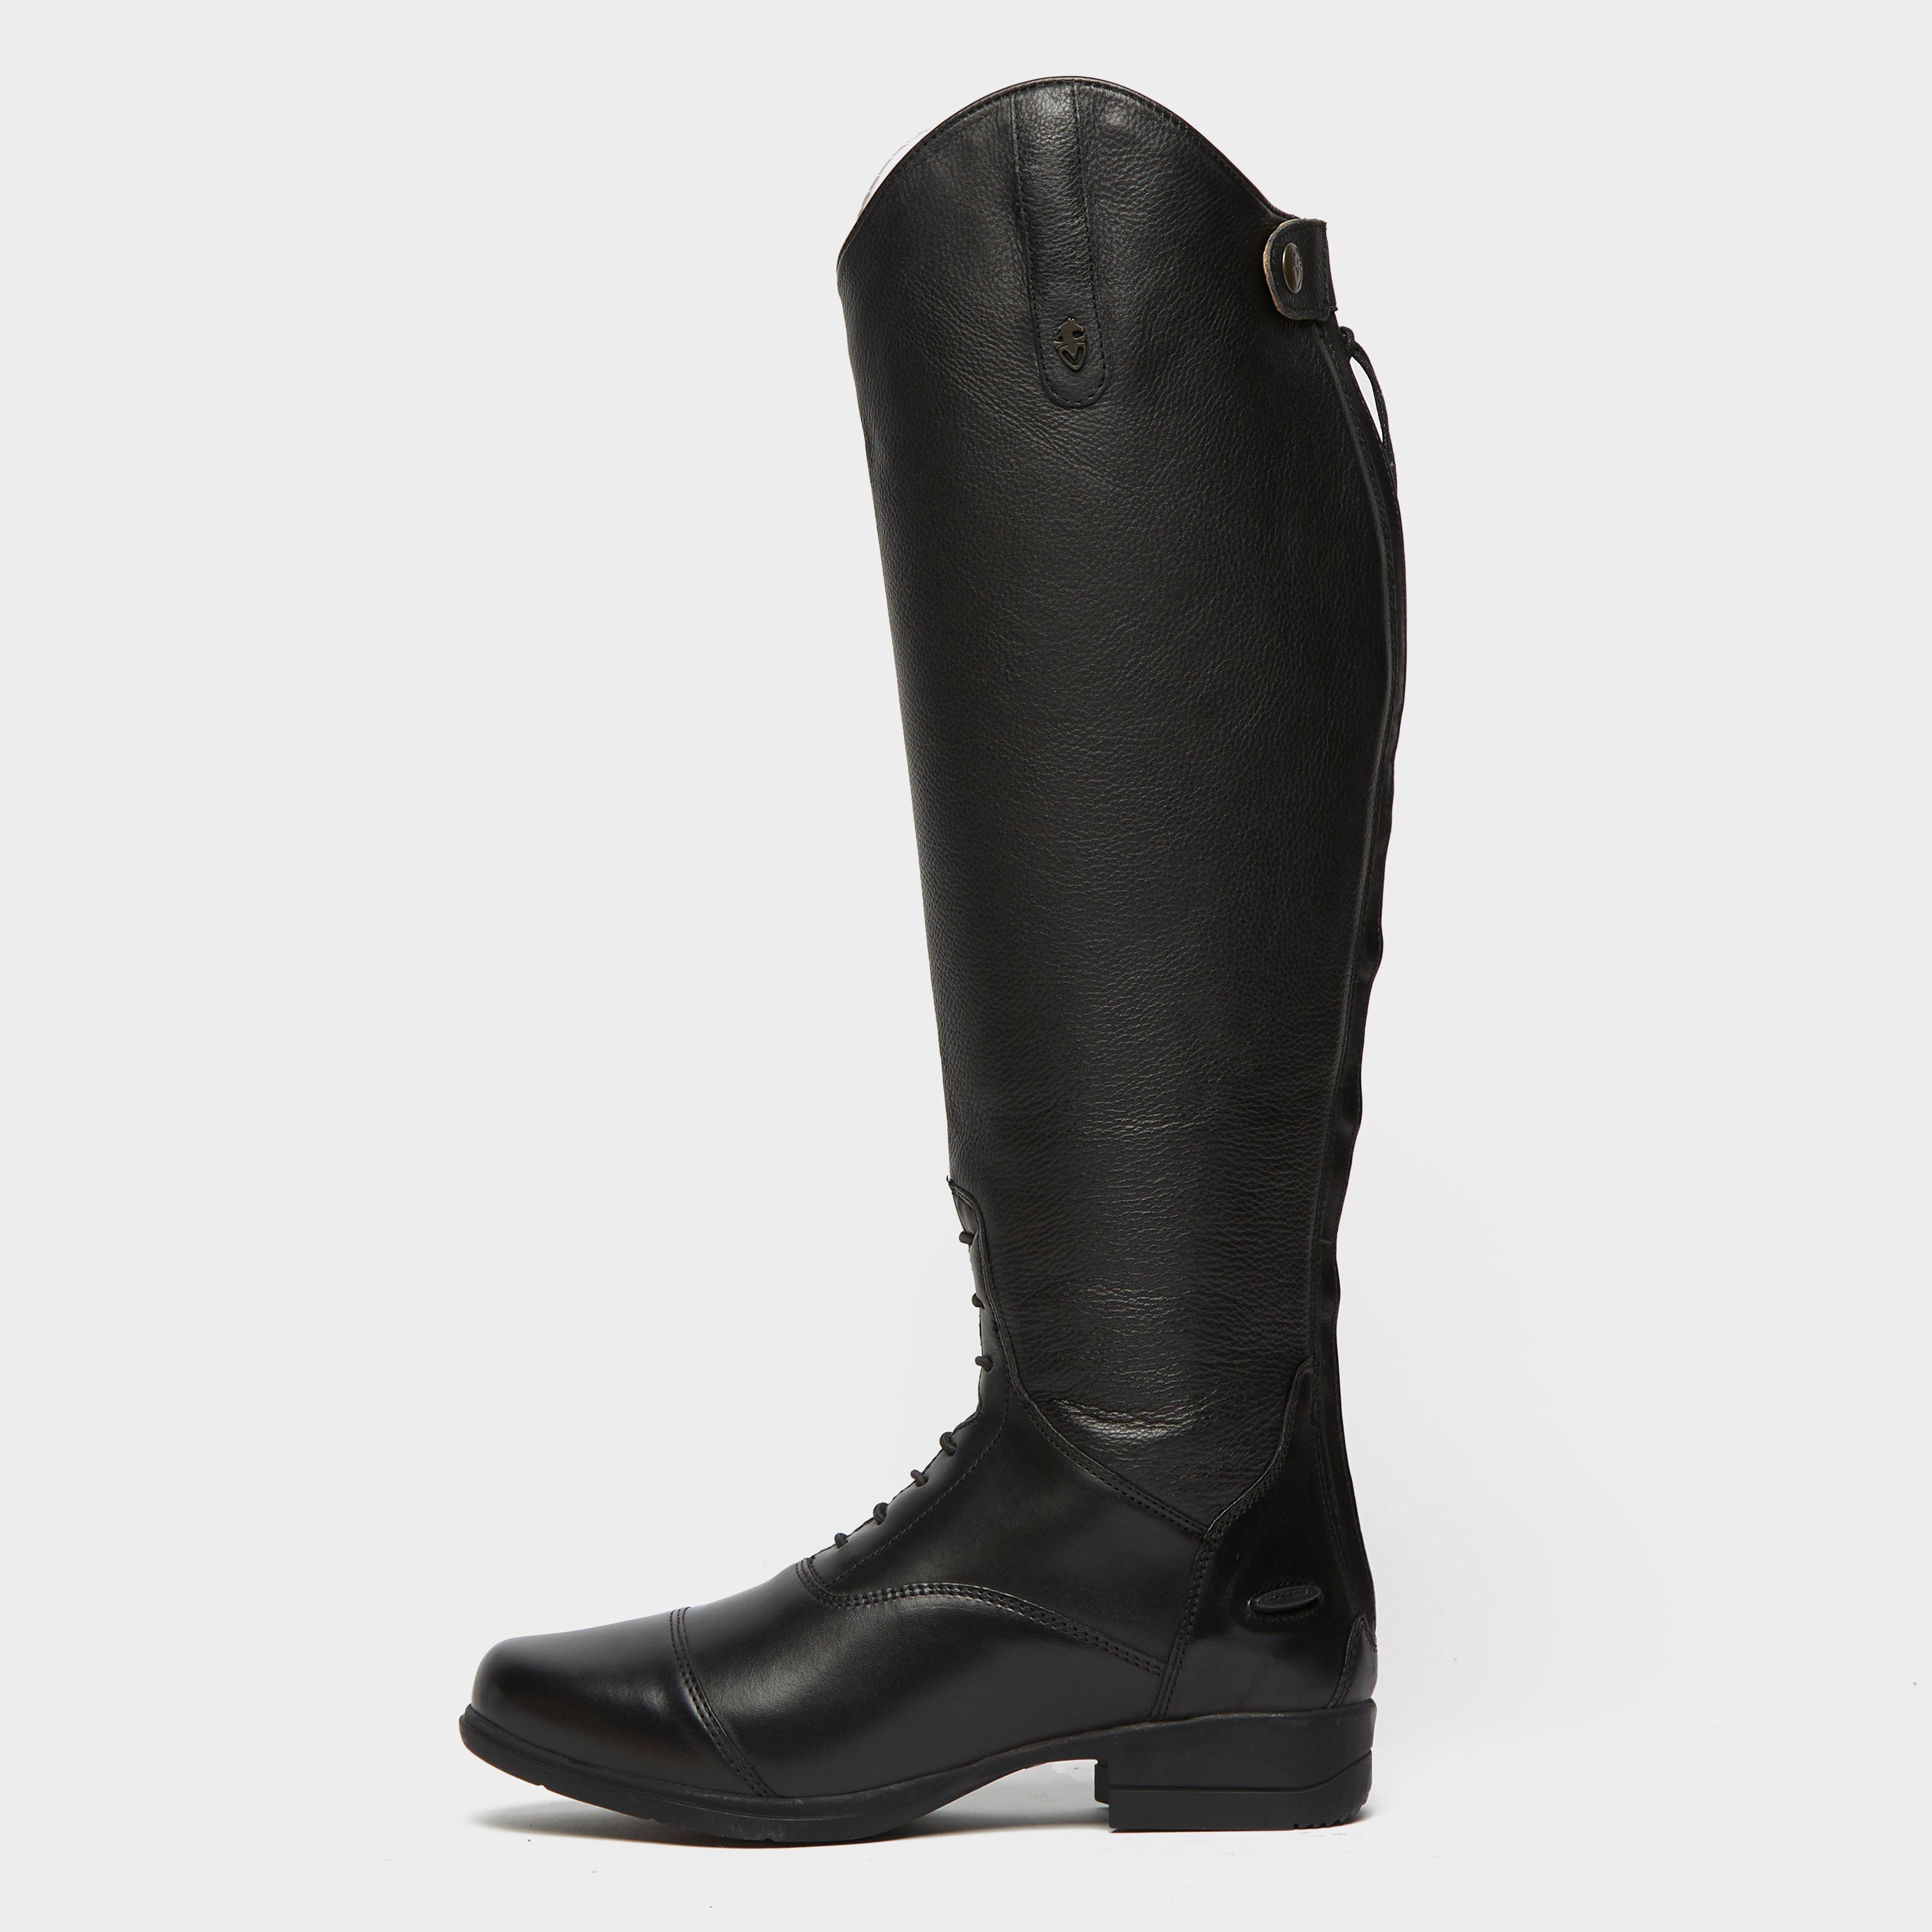  Moretta Womens Gianna Leather Field Riding Boots Black, Black